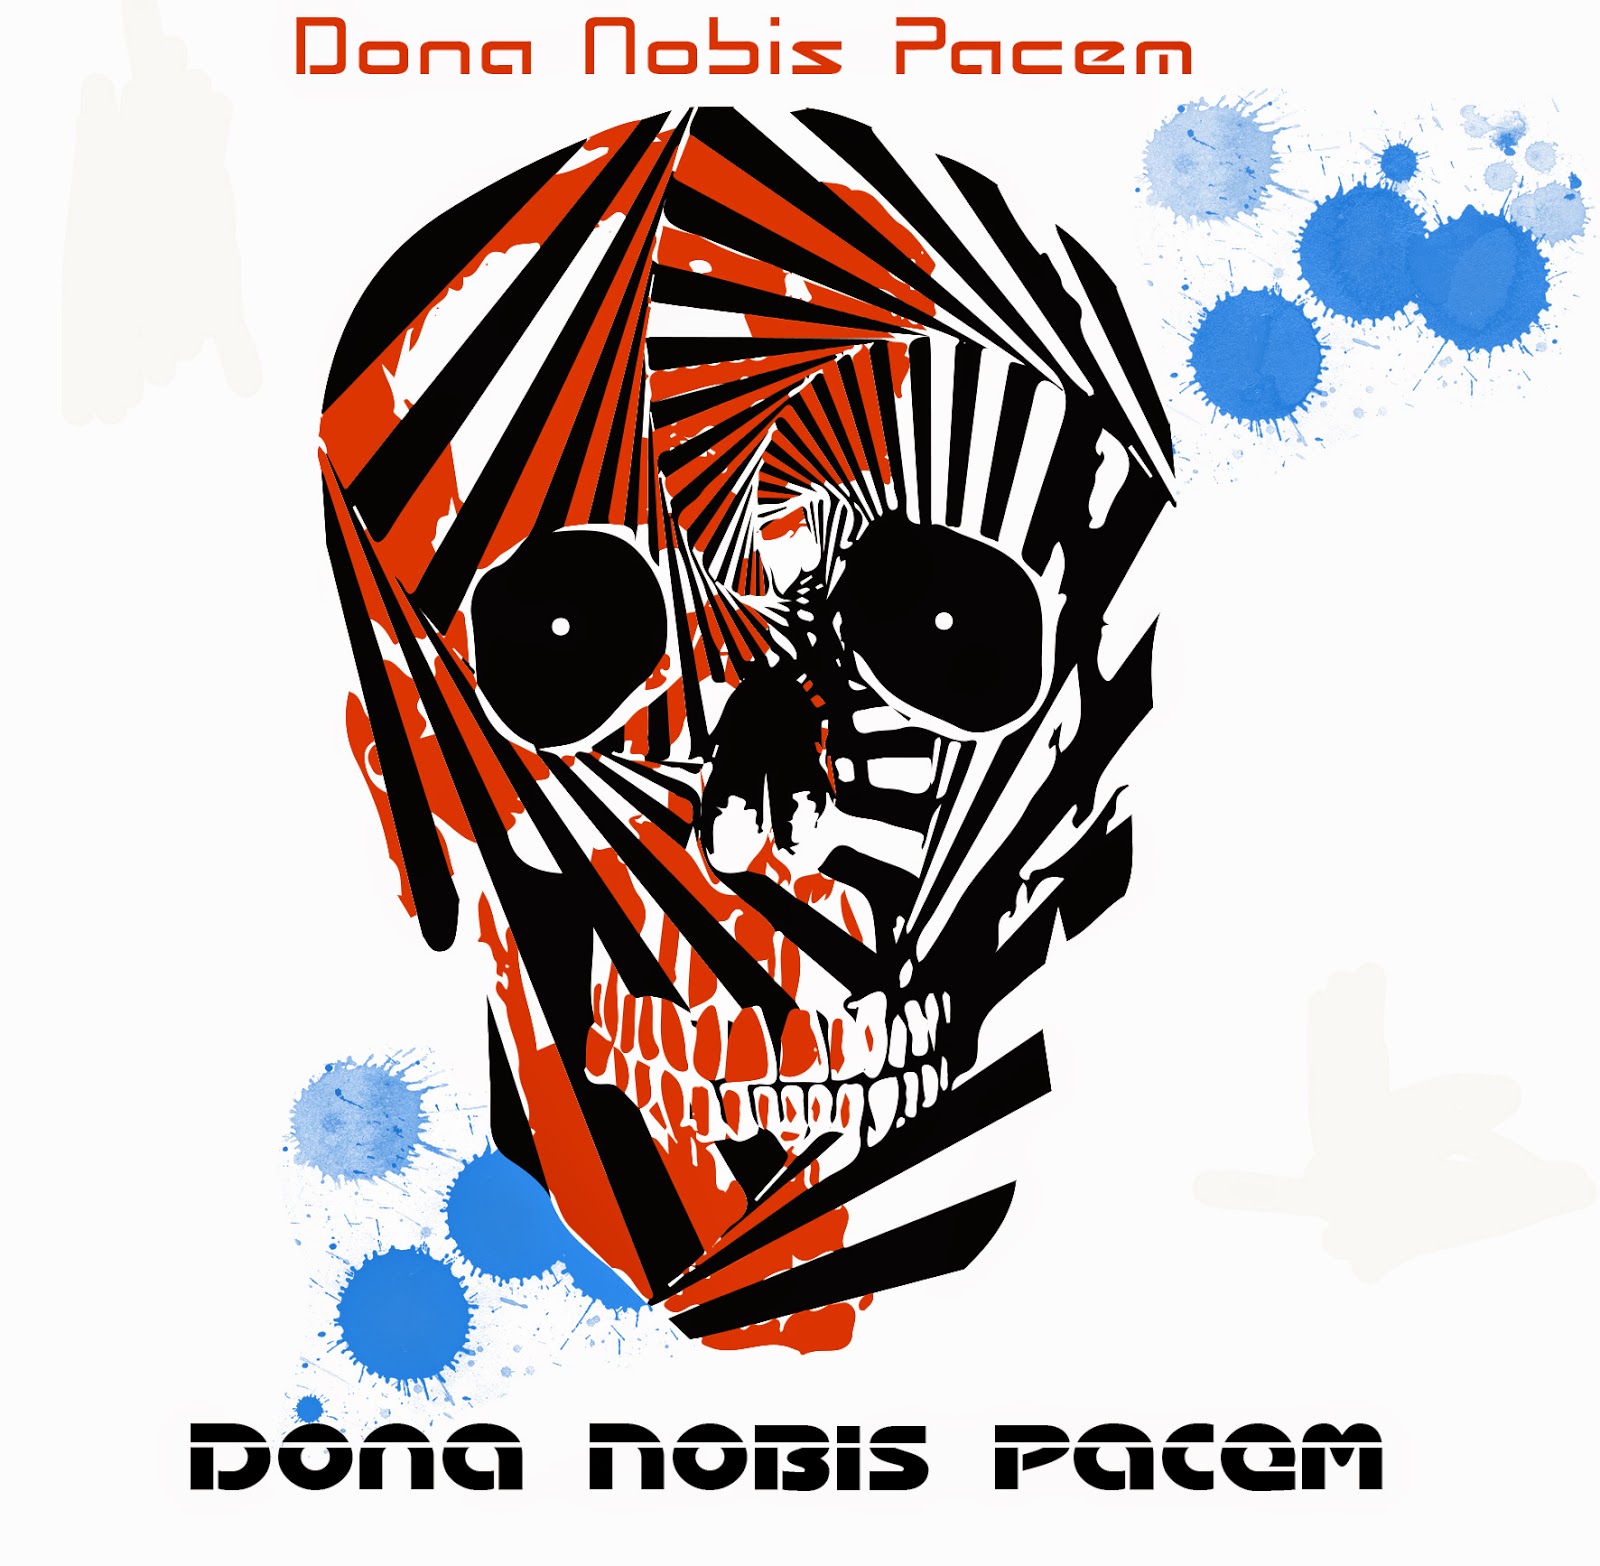 Stencil multicapa gratis imprimible Dona Nobis Pacem